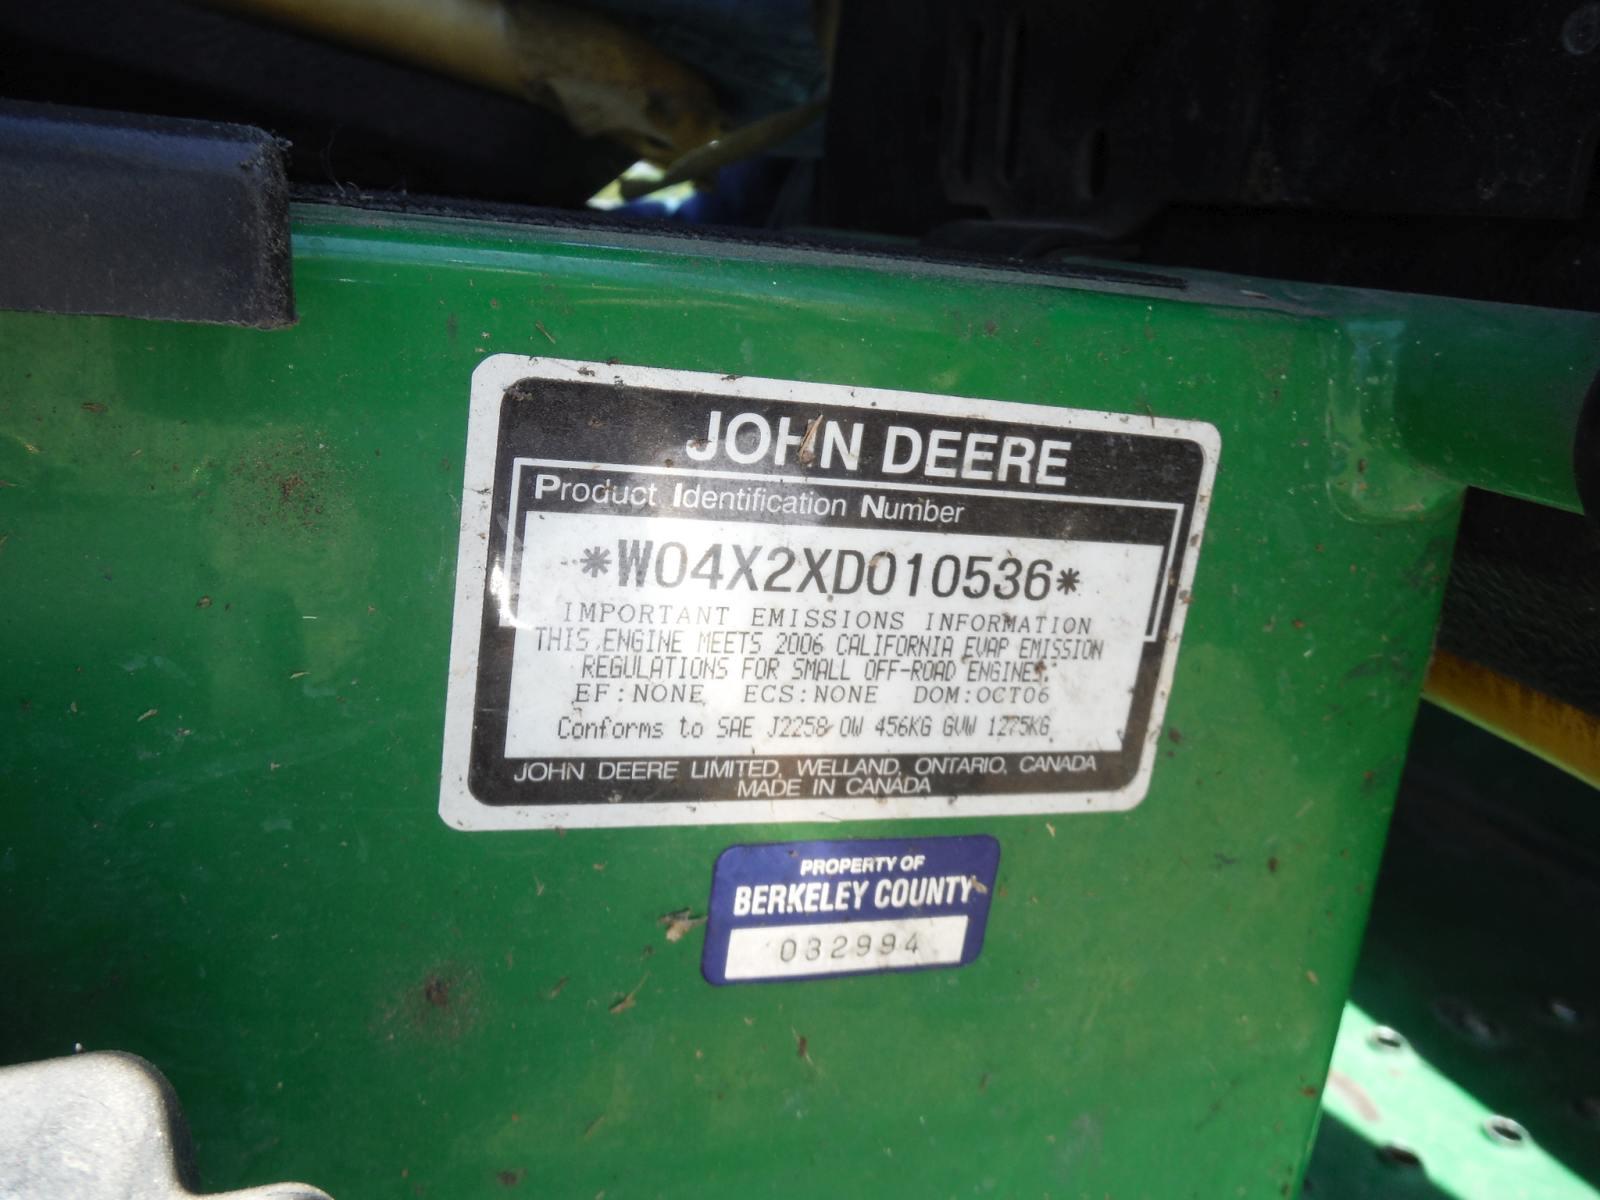 2006 John Deere TX Gator Utility Vehicle, s/n W04X2XD010536 (No Title): Kaw